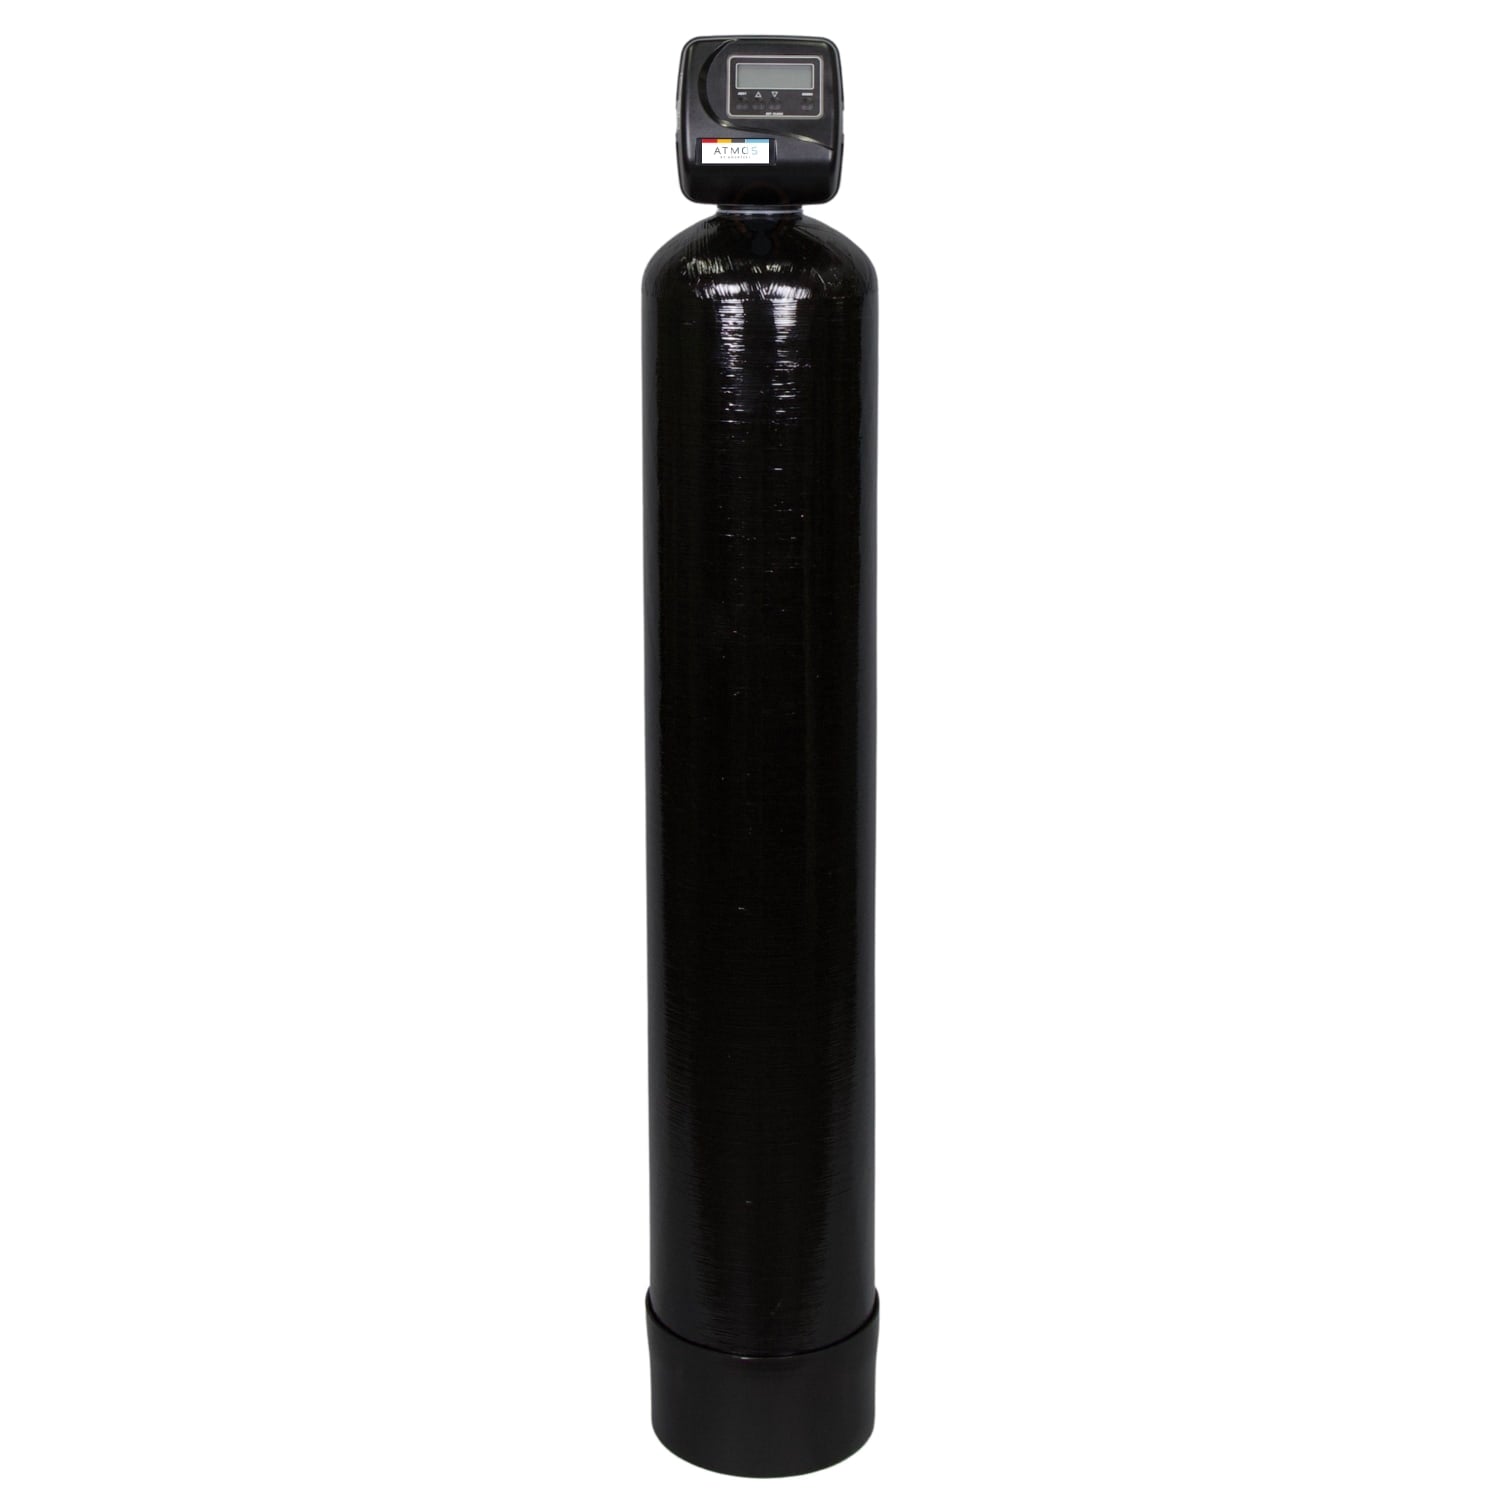 Atmos-AIO iron manganese sulphur filter tank front